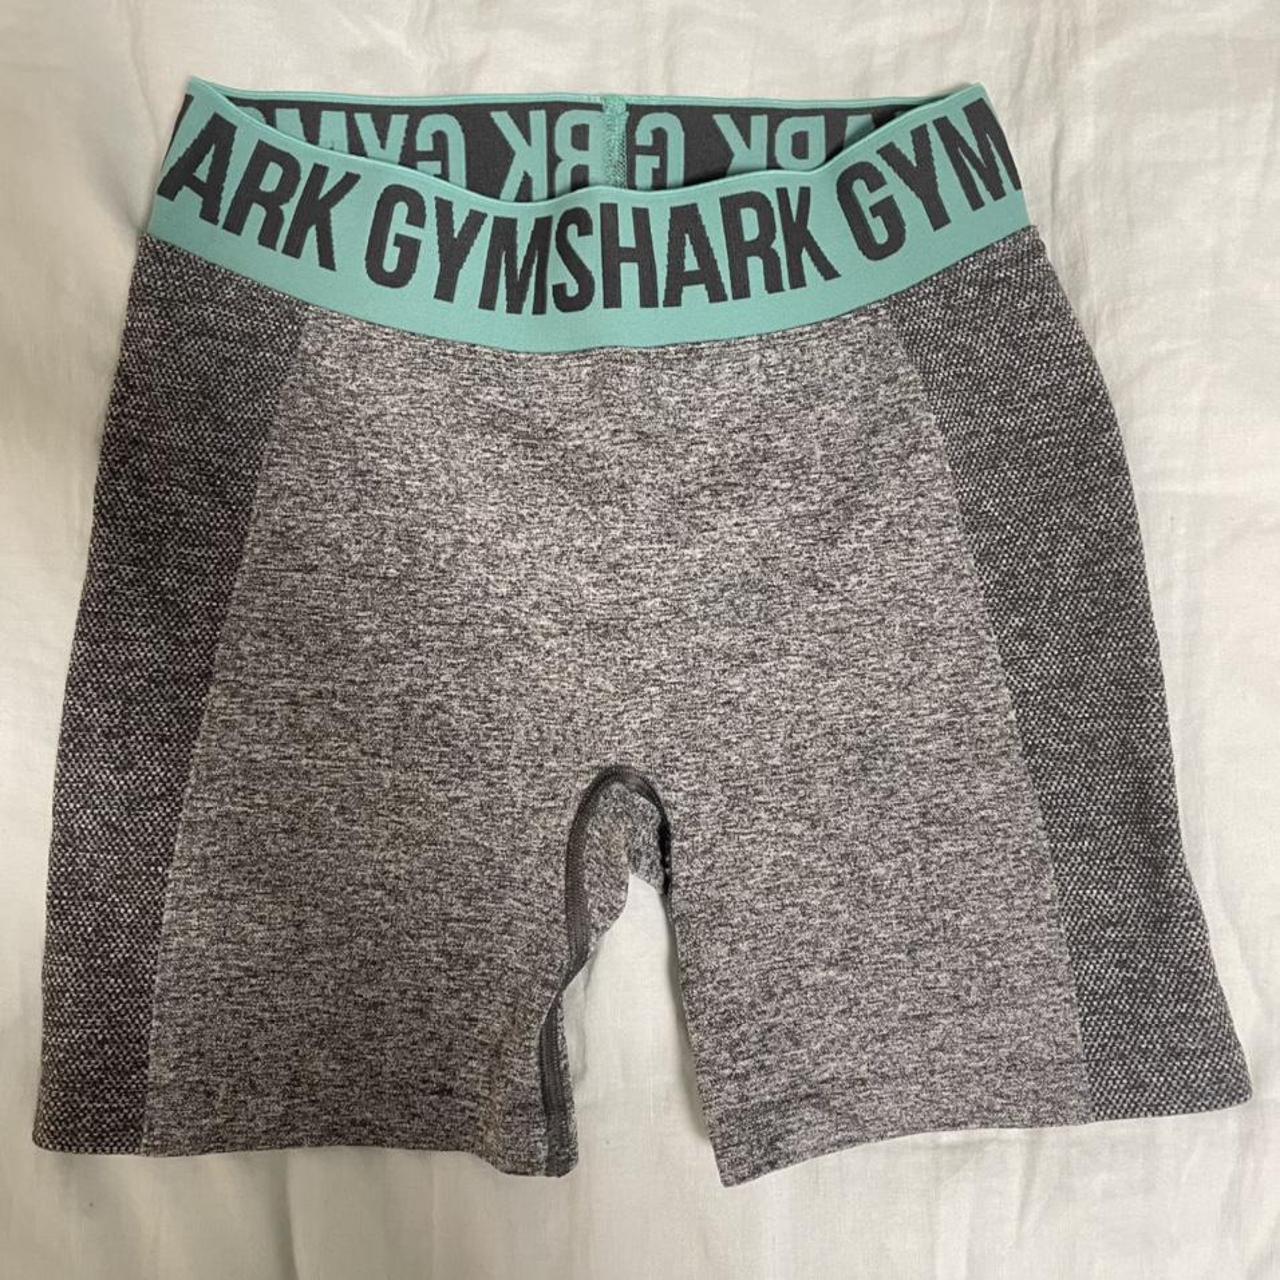 Gymshark flex shorts - Charcoal Marl/Light Green in... - Depop